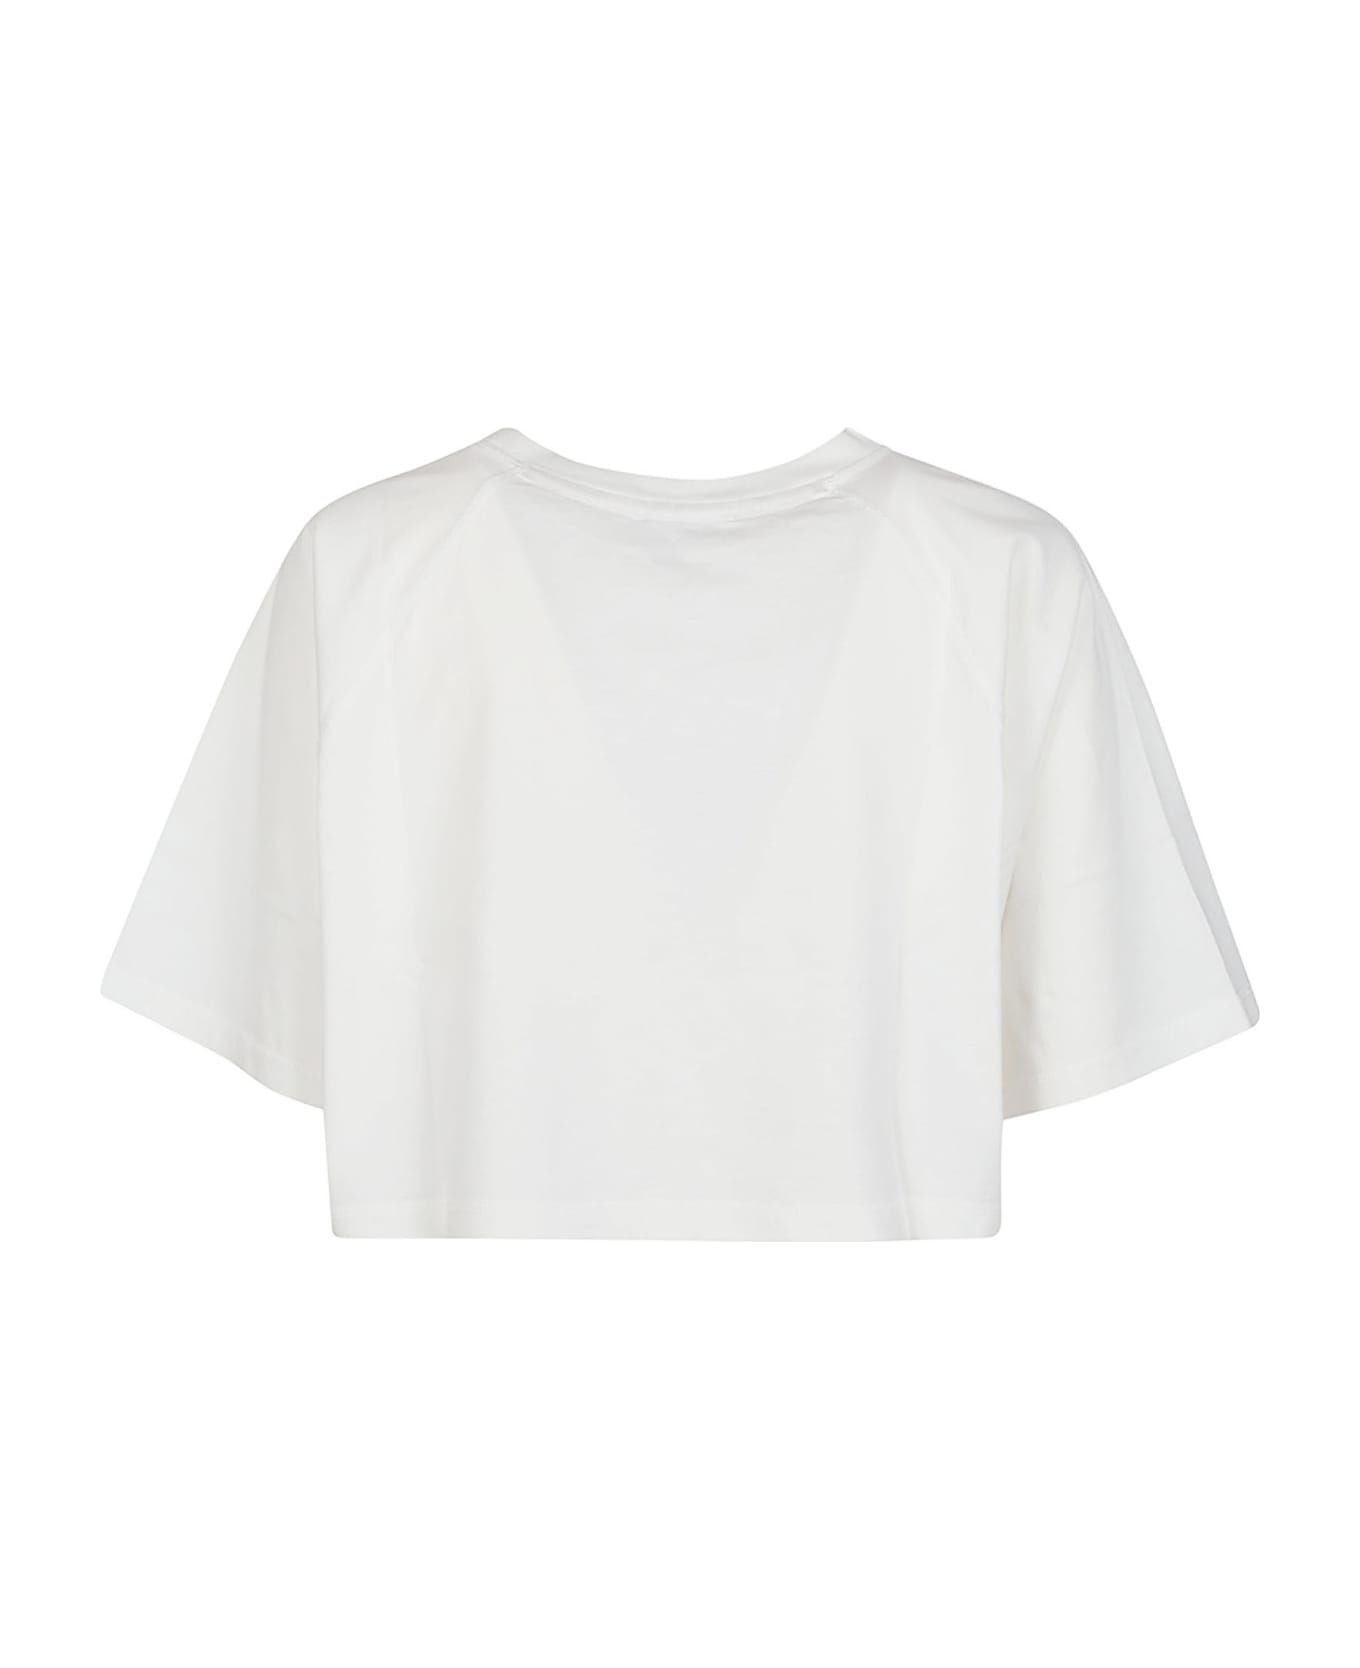 Kenzo By Verdy Boxy T-shirt - Blanc Casse